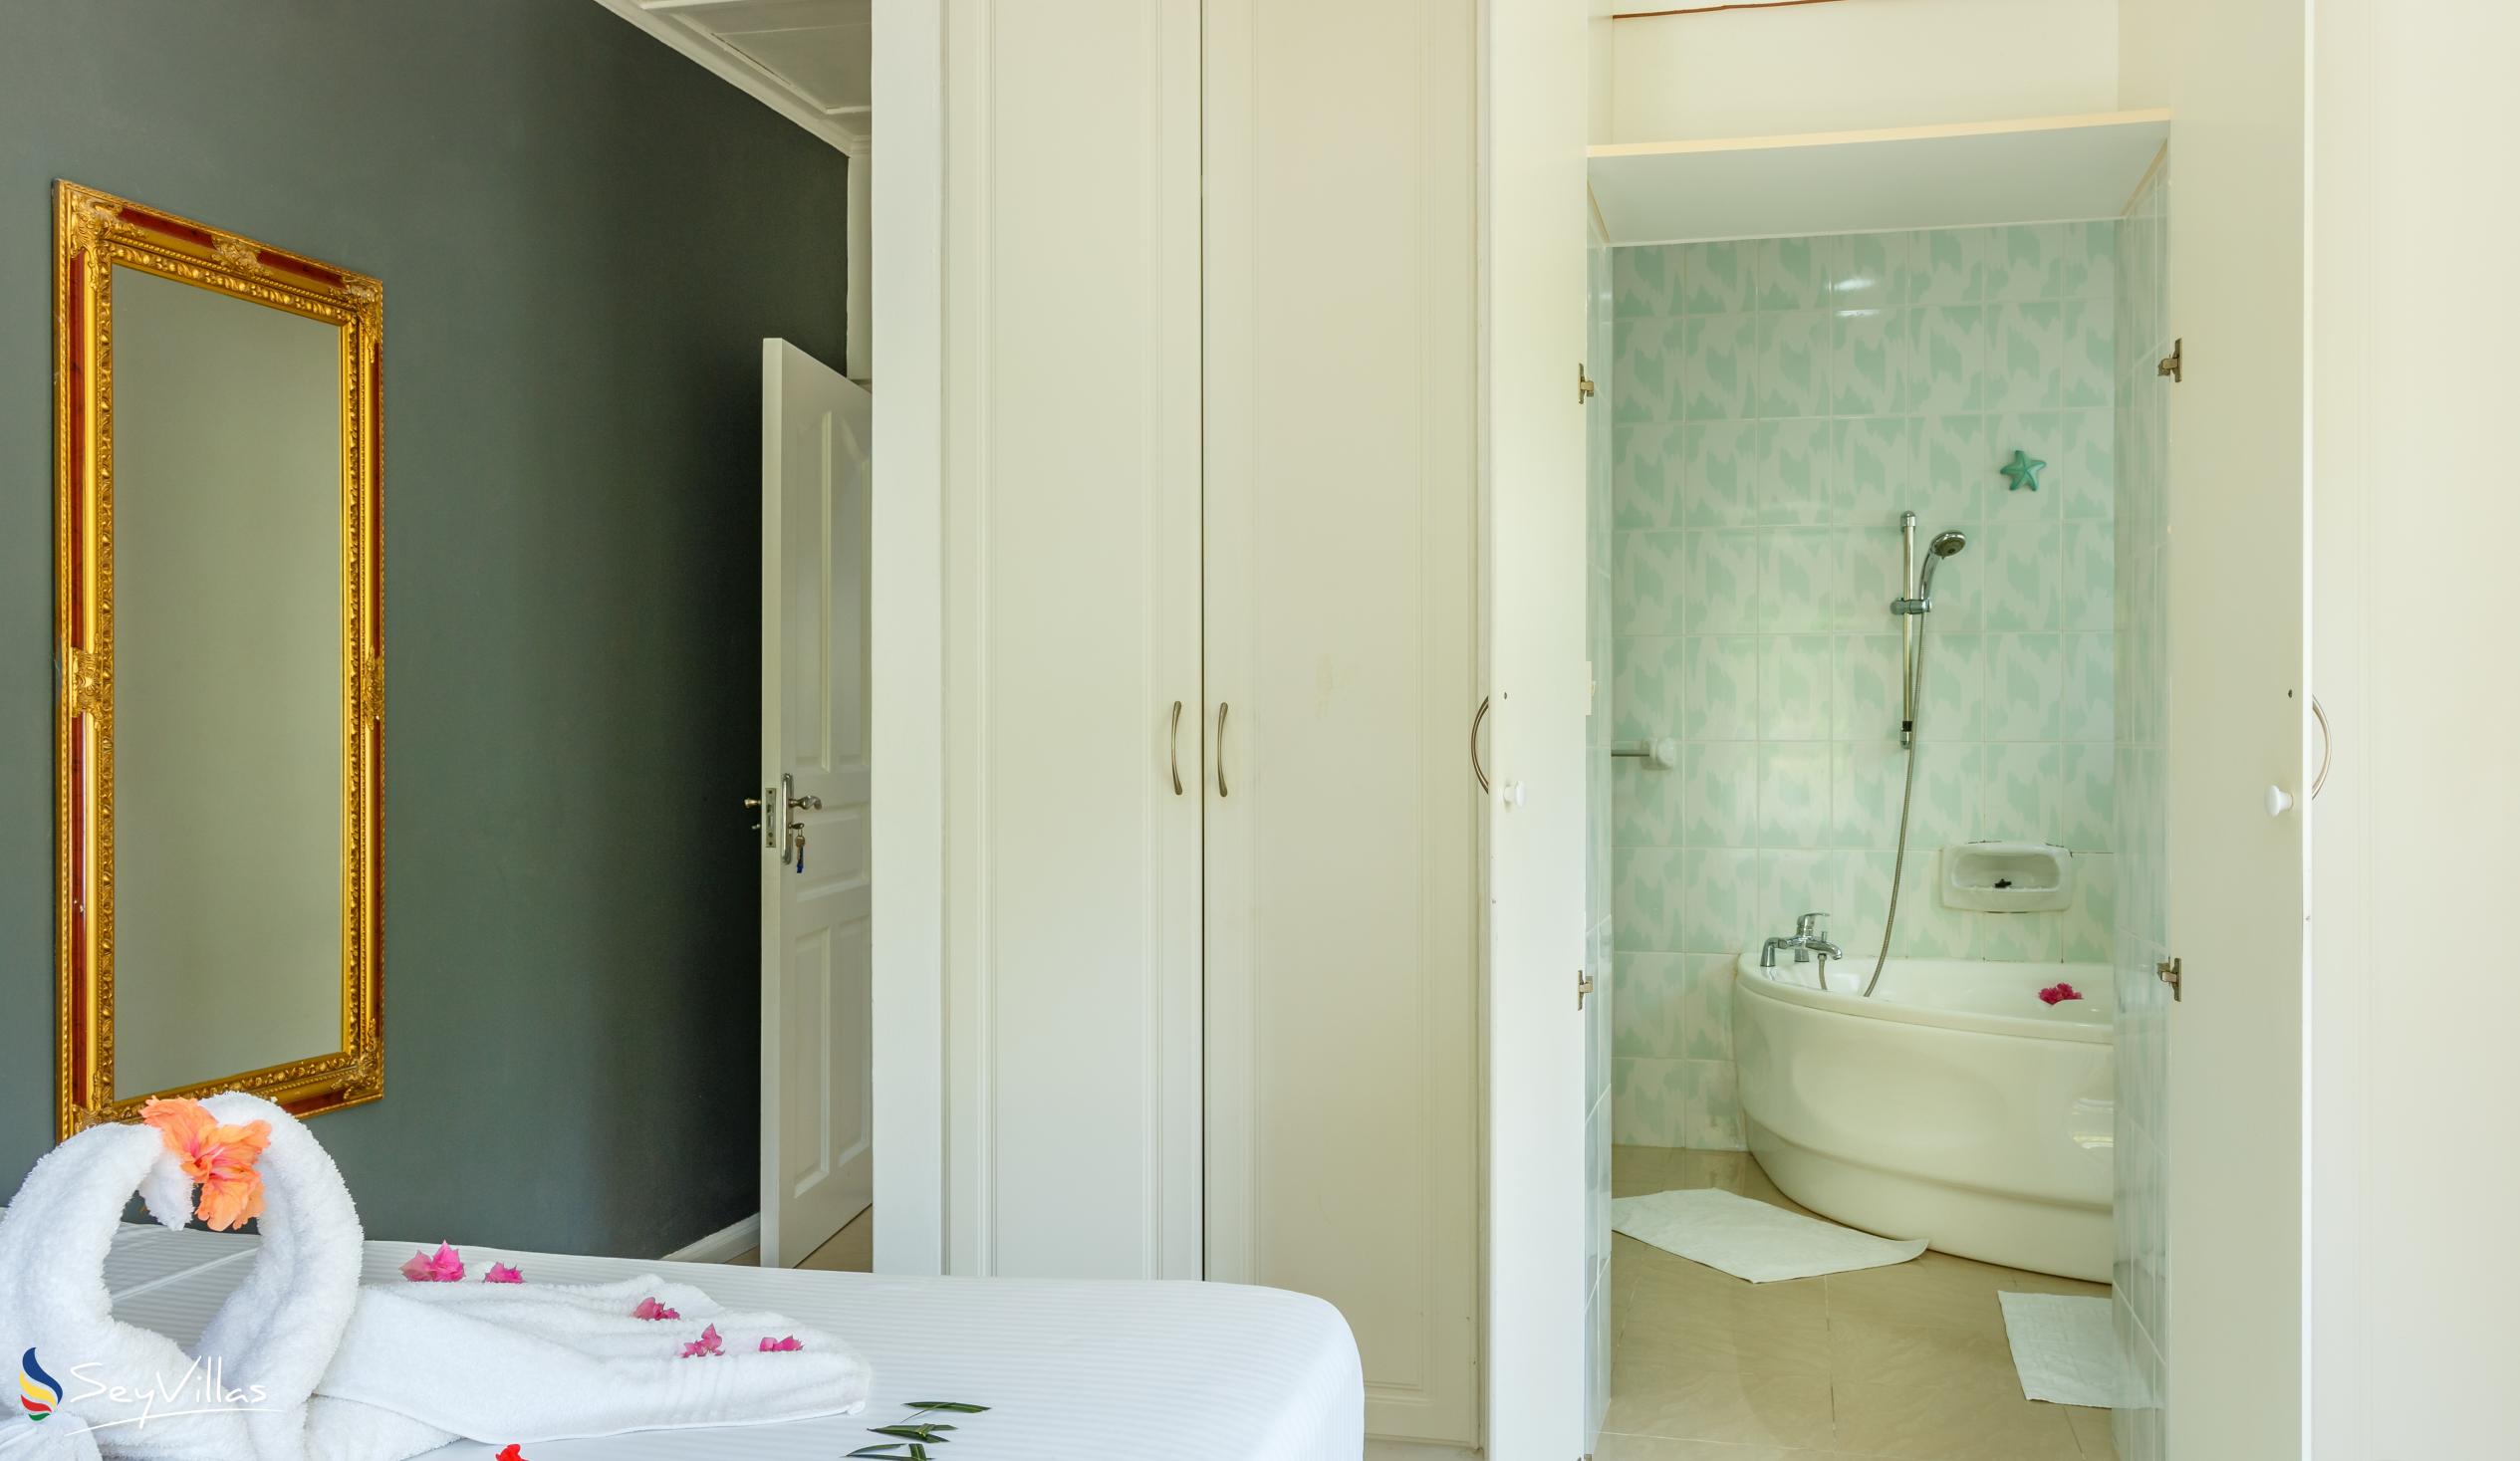 Photo 58: Coco Blanche (Maison Coco) - Double Room 3 - Mahé (Seychelles)